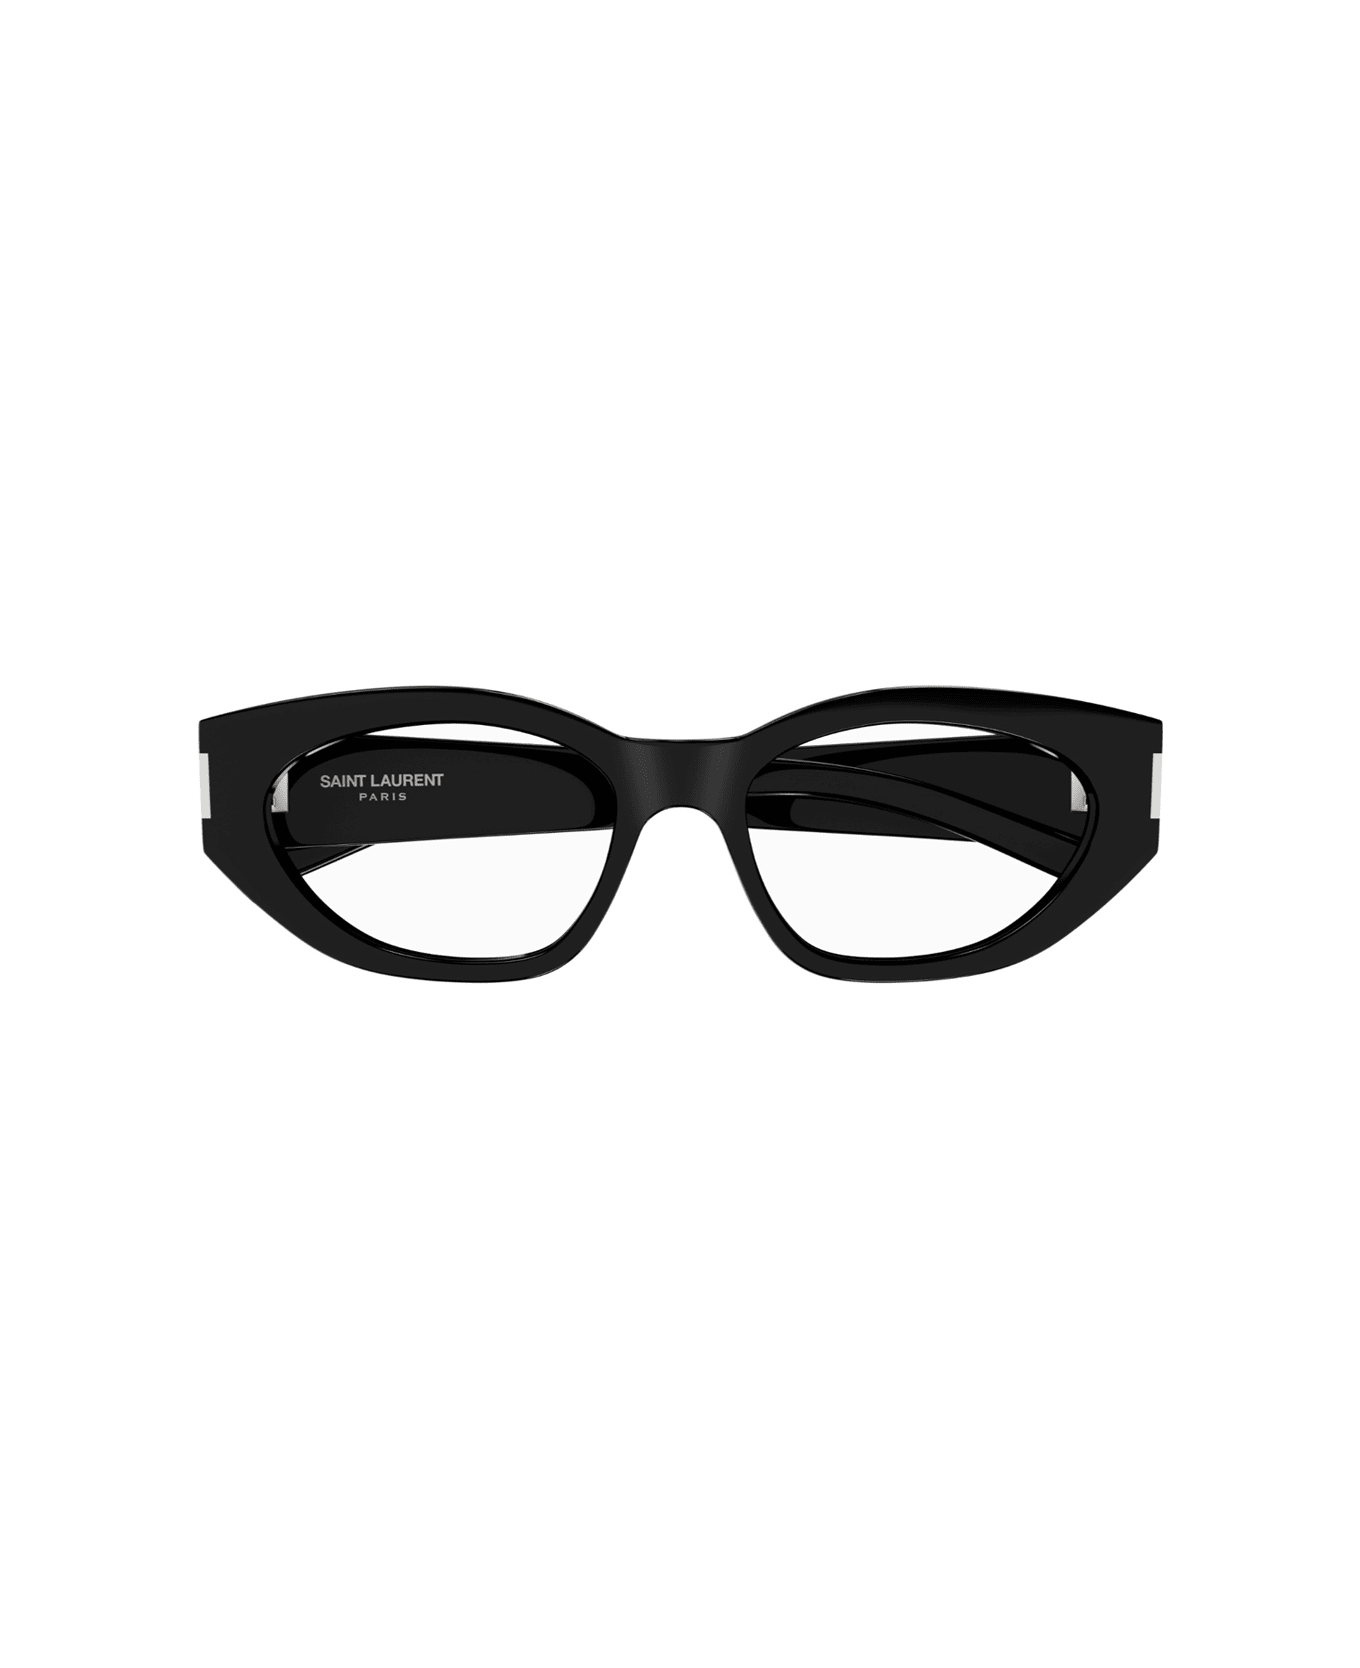 Saint Laurent Eyewear Sl 638 Opt 001 Glasses - Nero